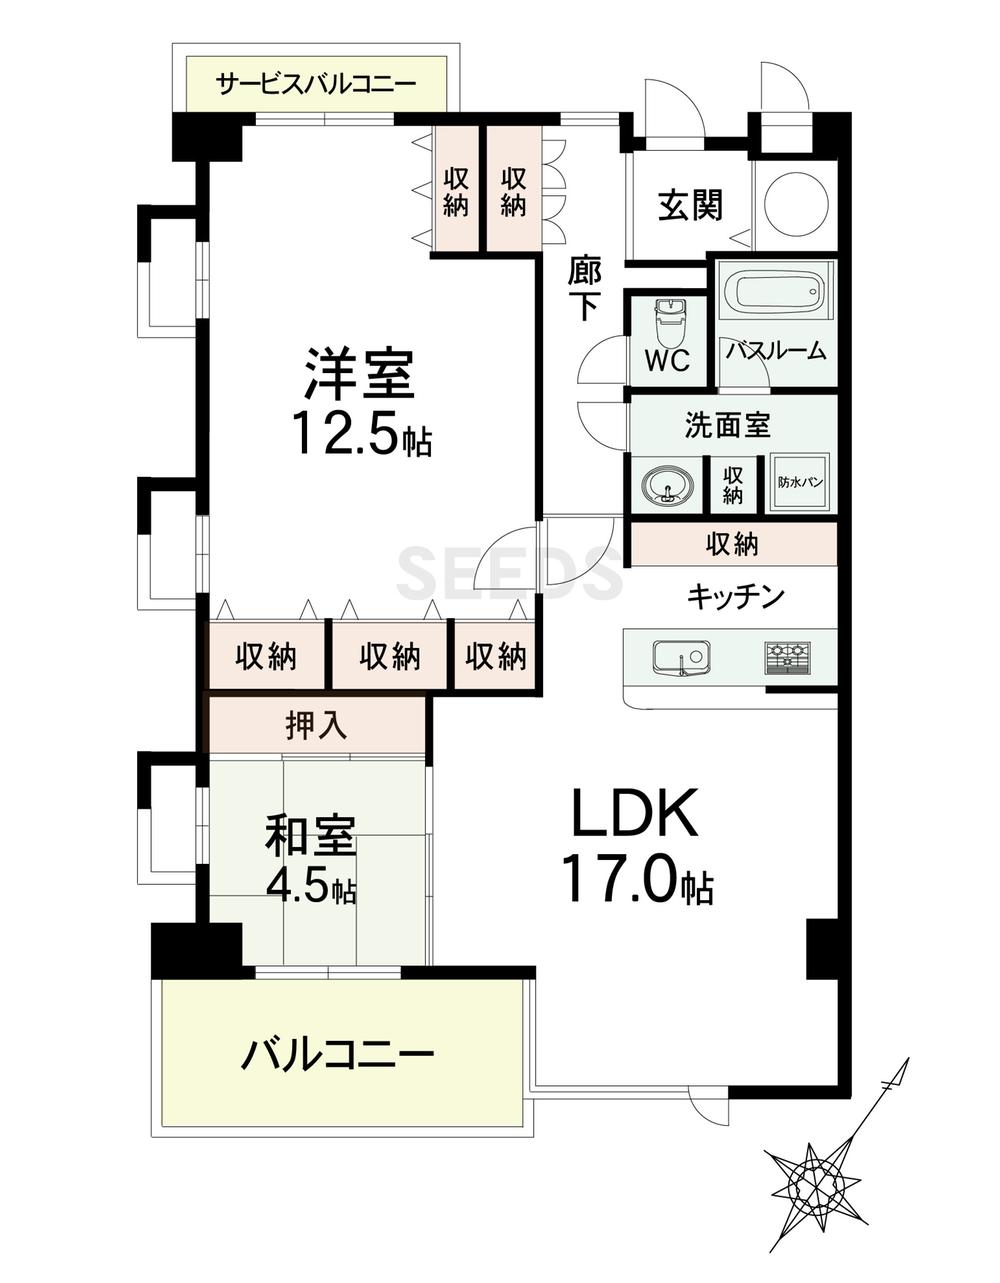 Floor plan. 3LDK, Price 18.3 million yen, Occupied area 83.63 sq m , Balcony area 10.94 sq m